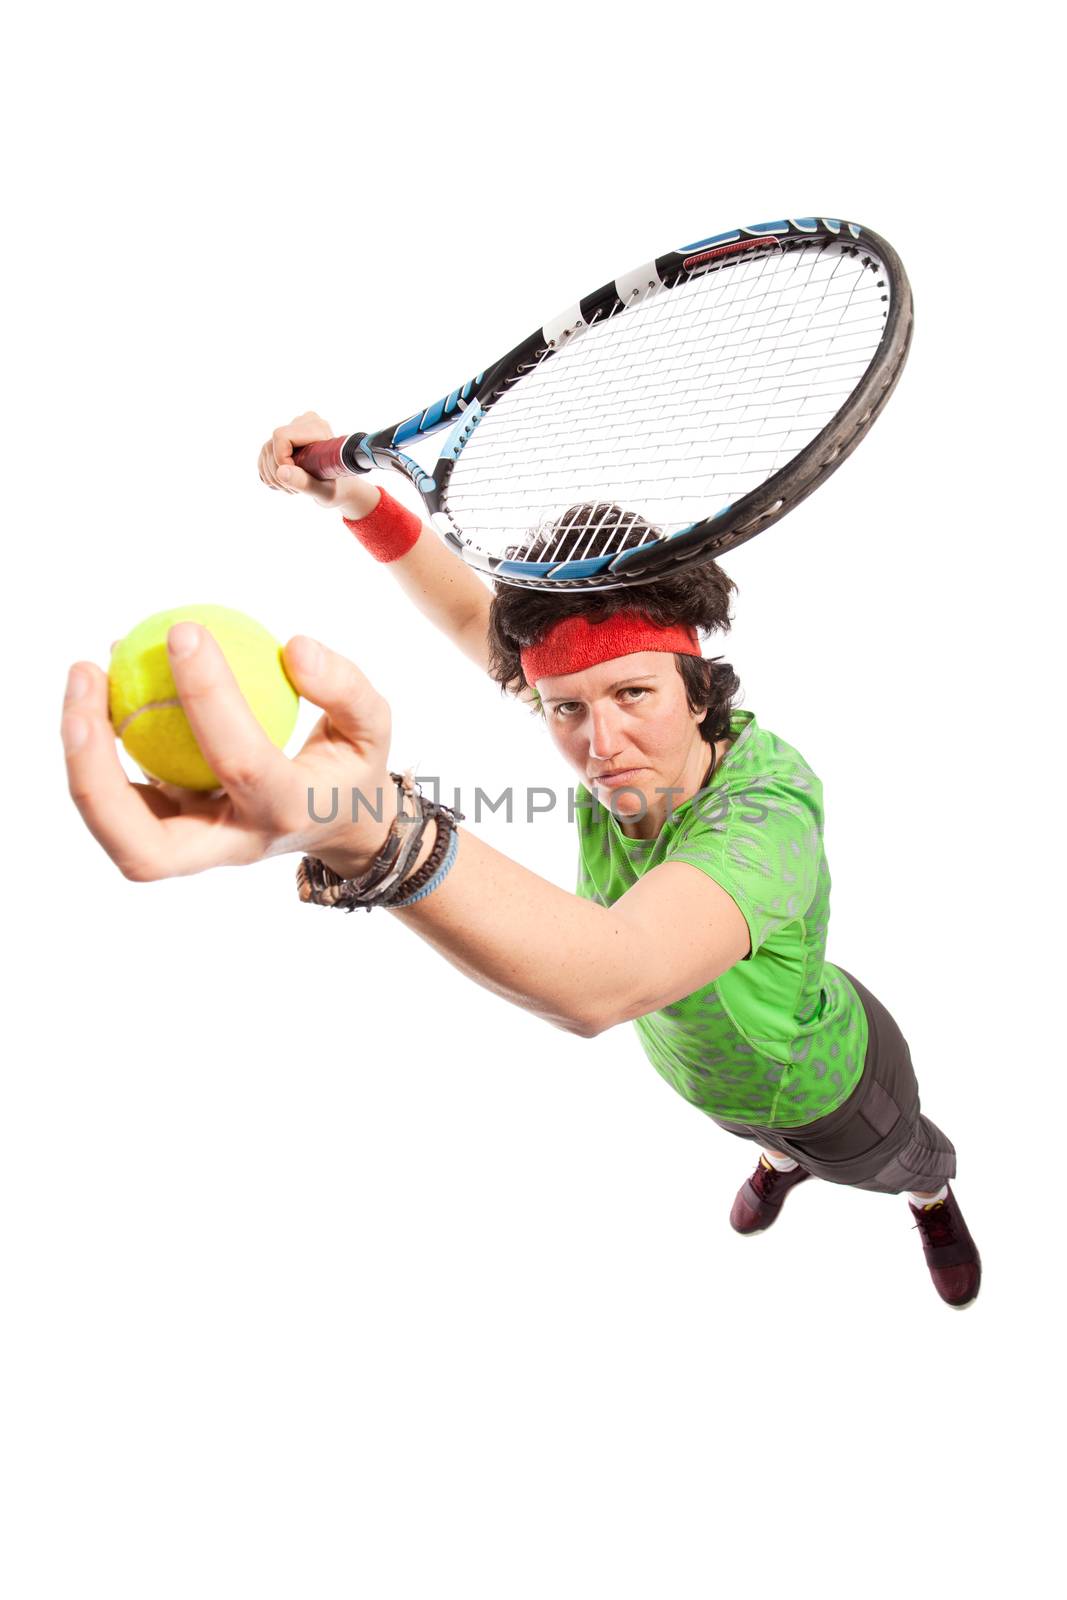 Tennis player portrait by kokimk